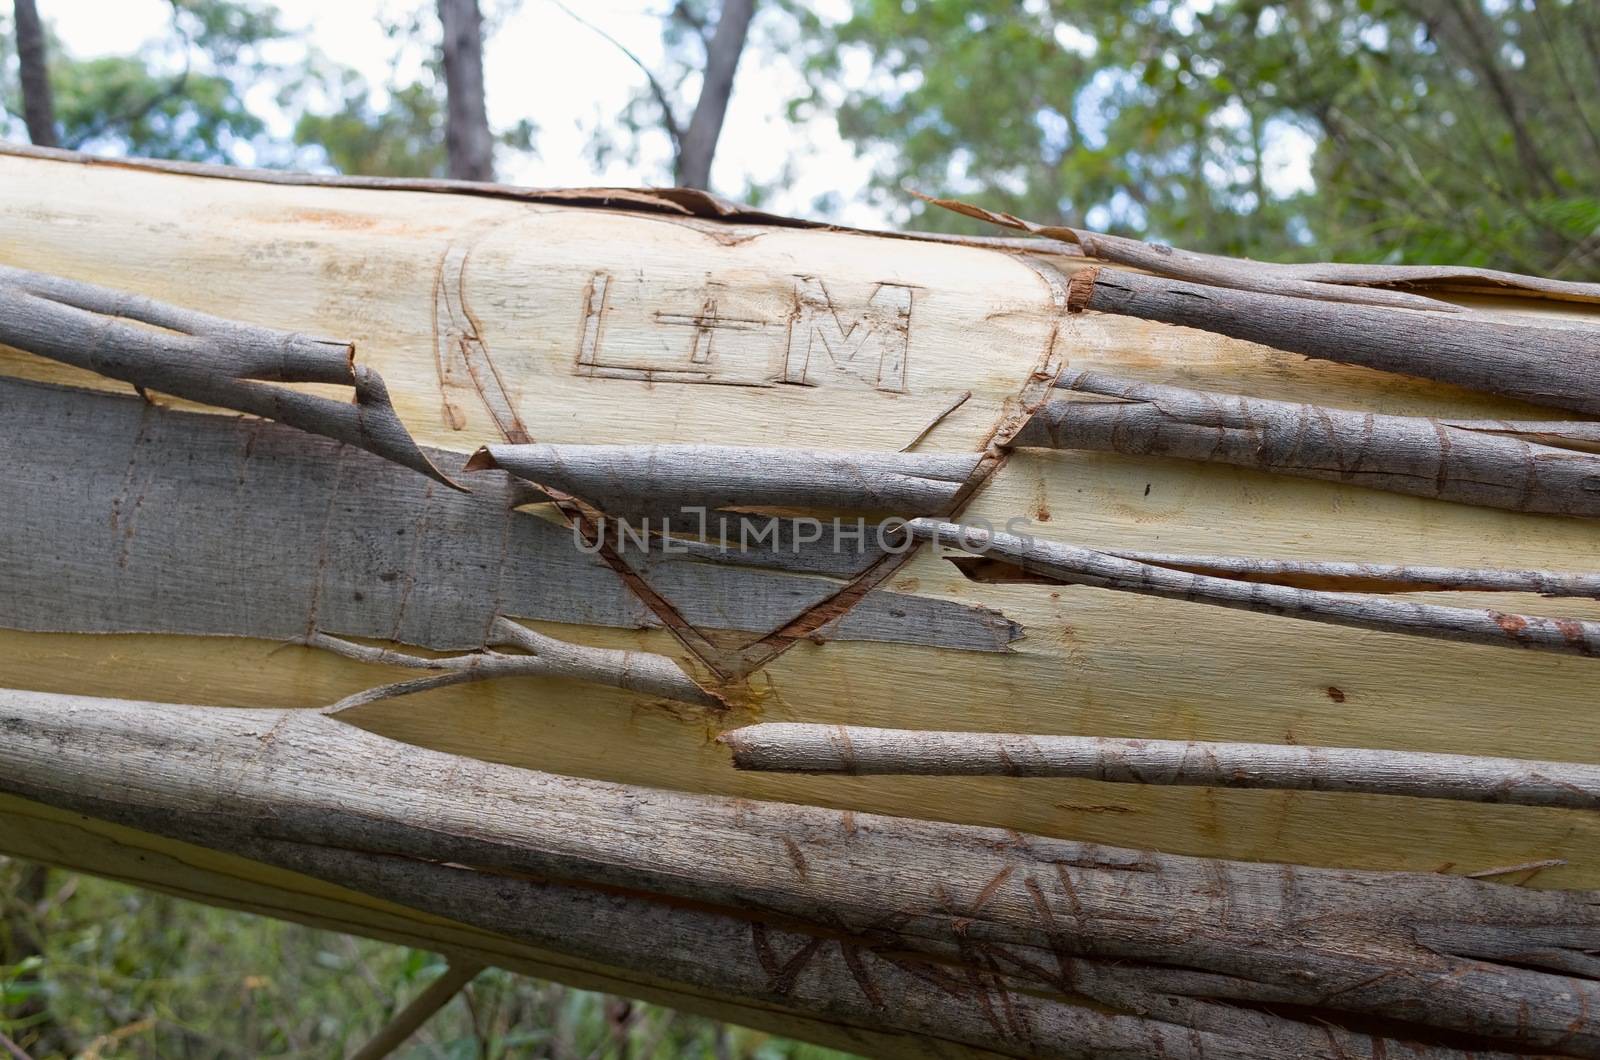 Lovers' Initials on Eucalyptus fallen across the trail